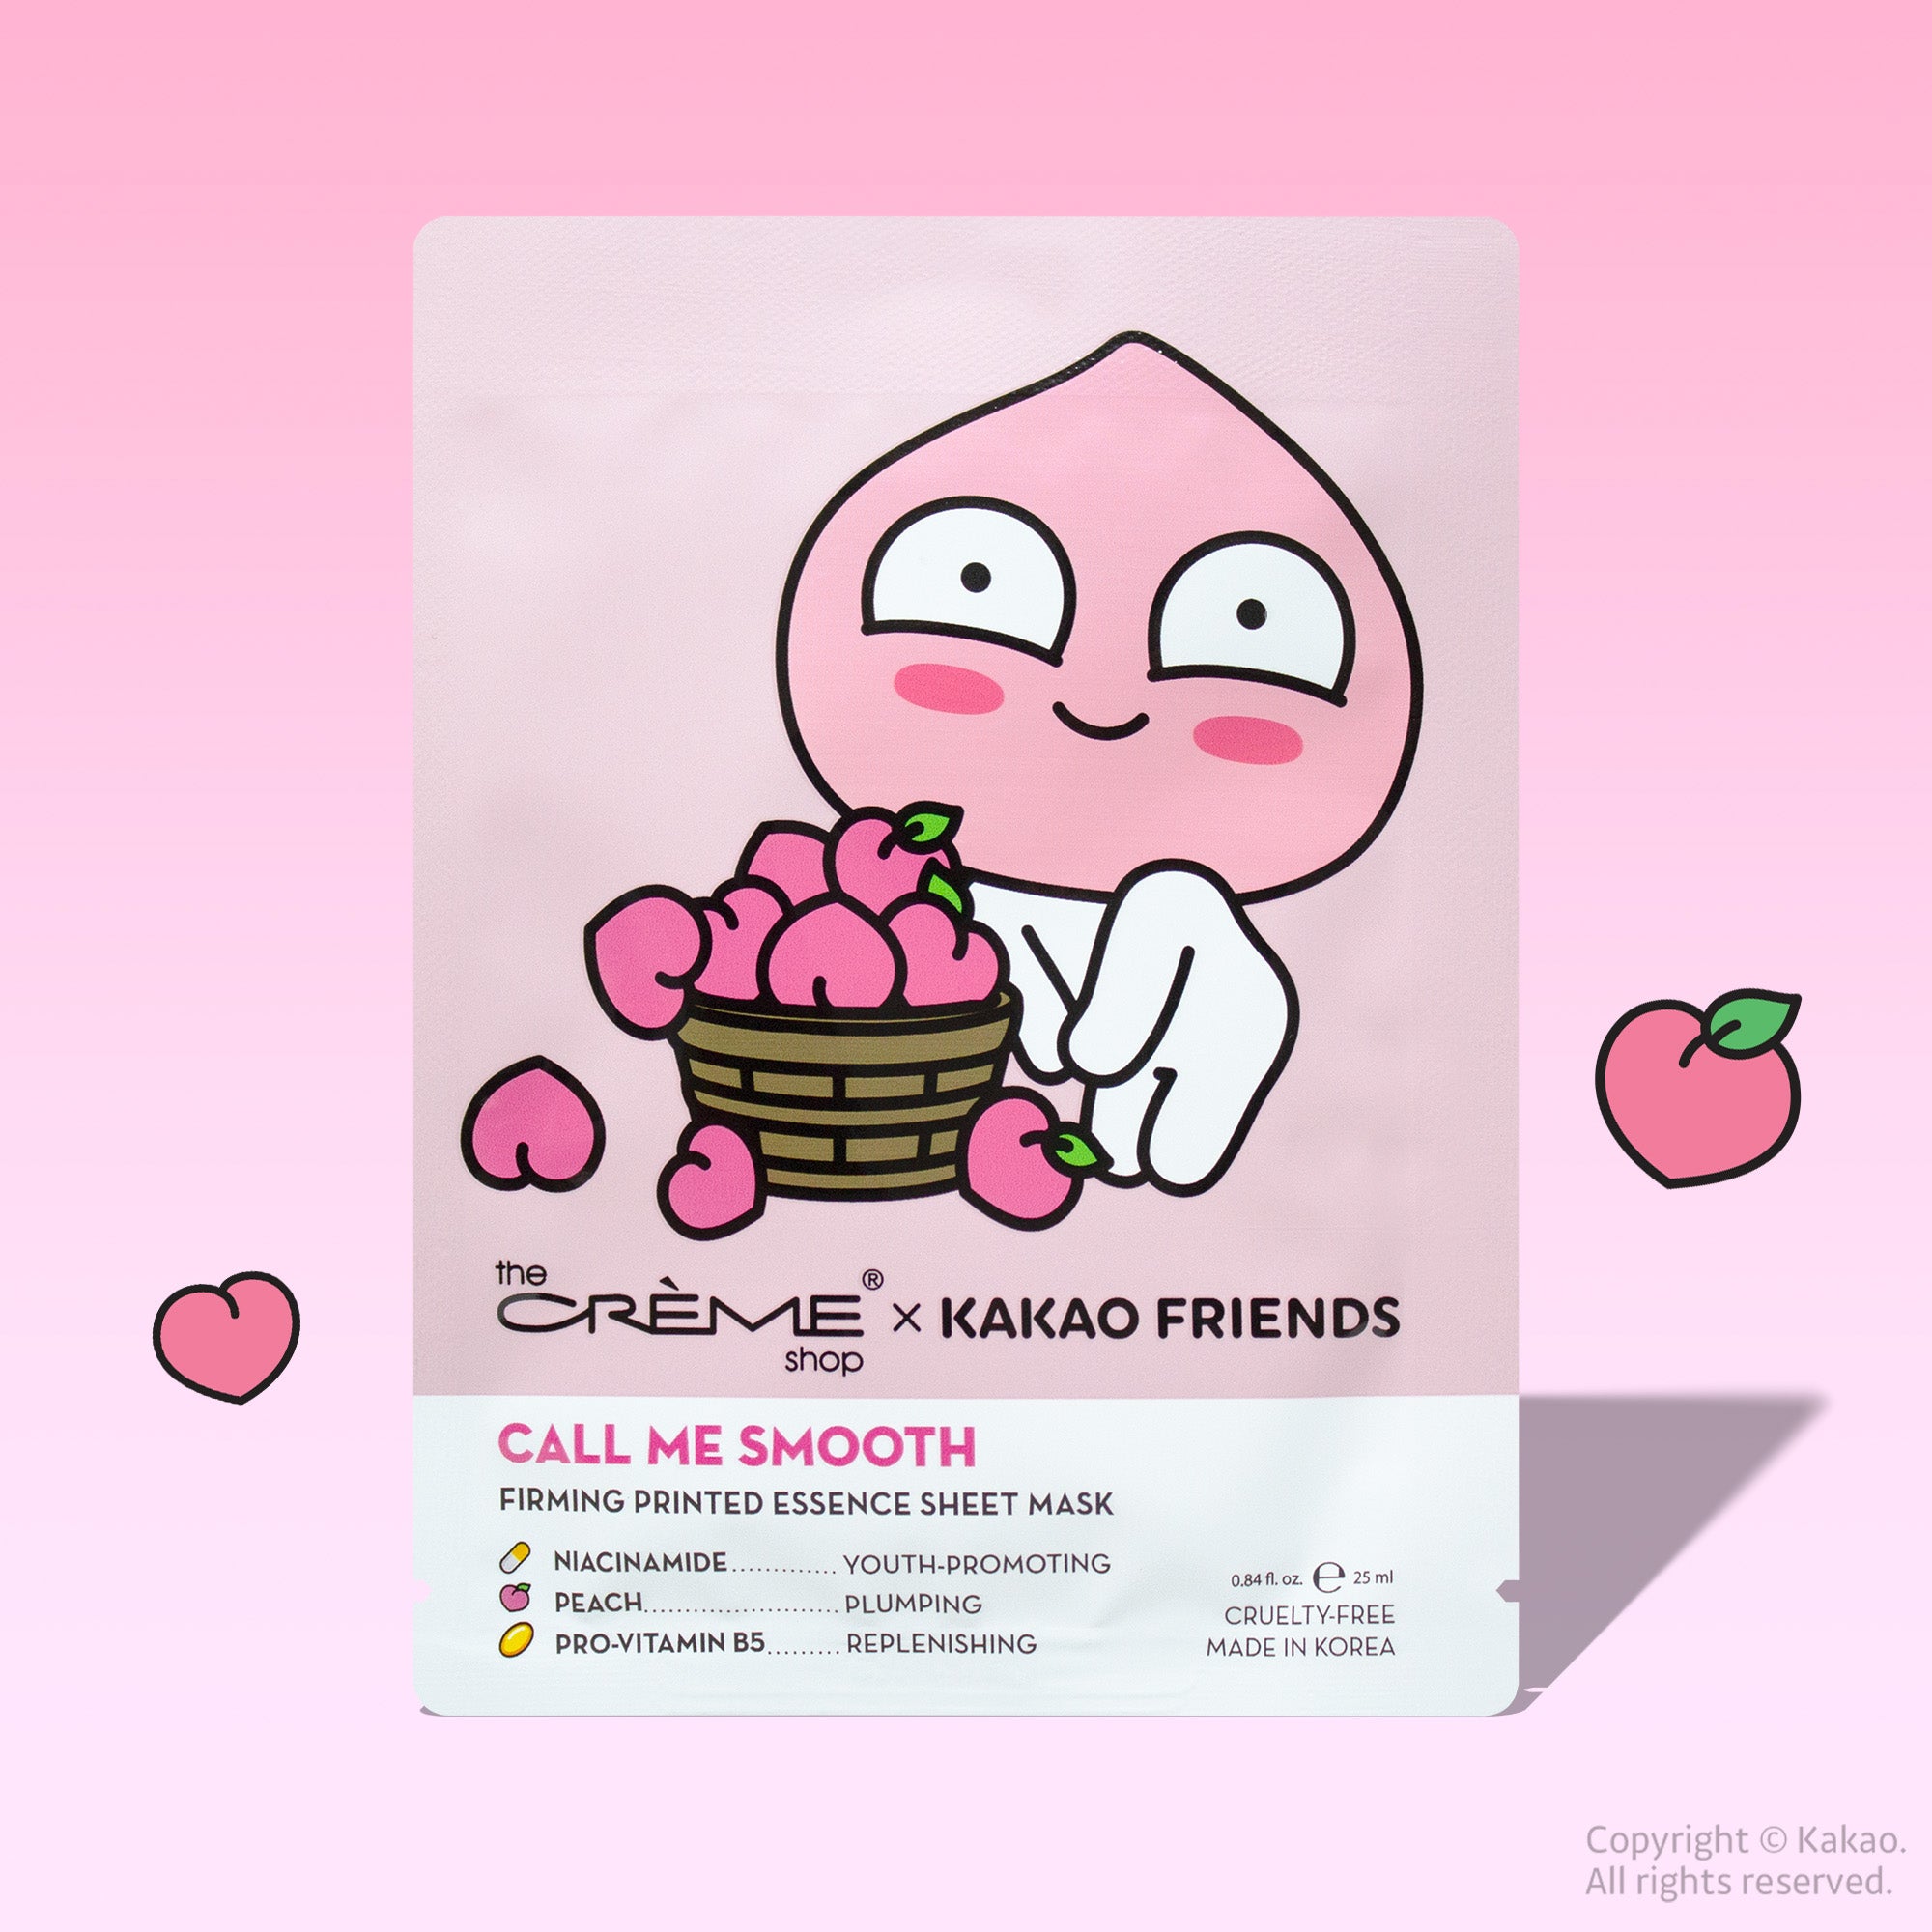 The Crème Shop x KAKAO FRIENDS - APEACH CALL ME SMOOTH Printed Essence Sheet Mask